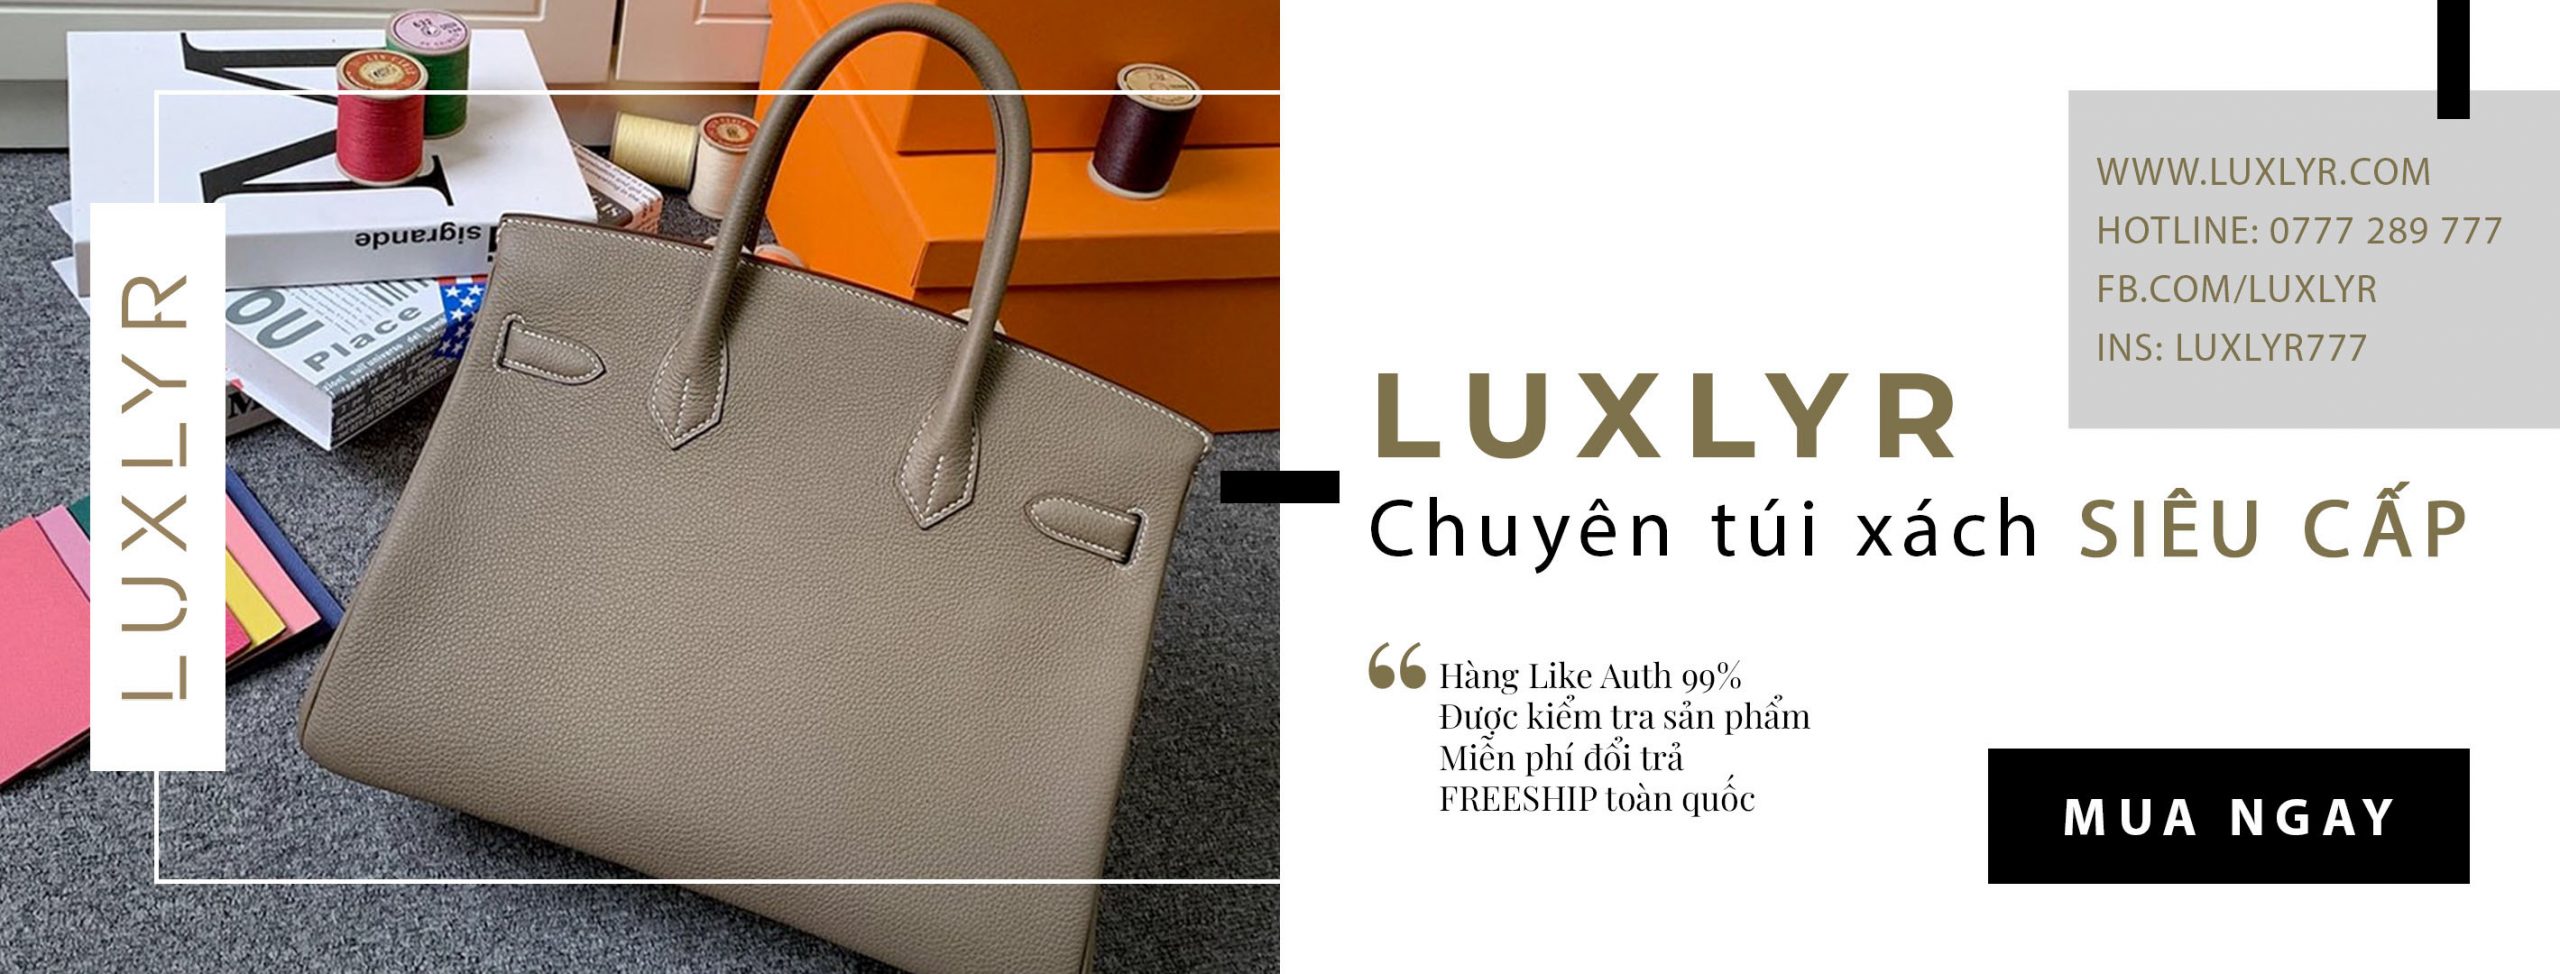 Luxlyr -  Shop túi xách nữ TPHCM giá rẻ